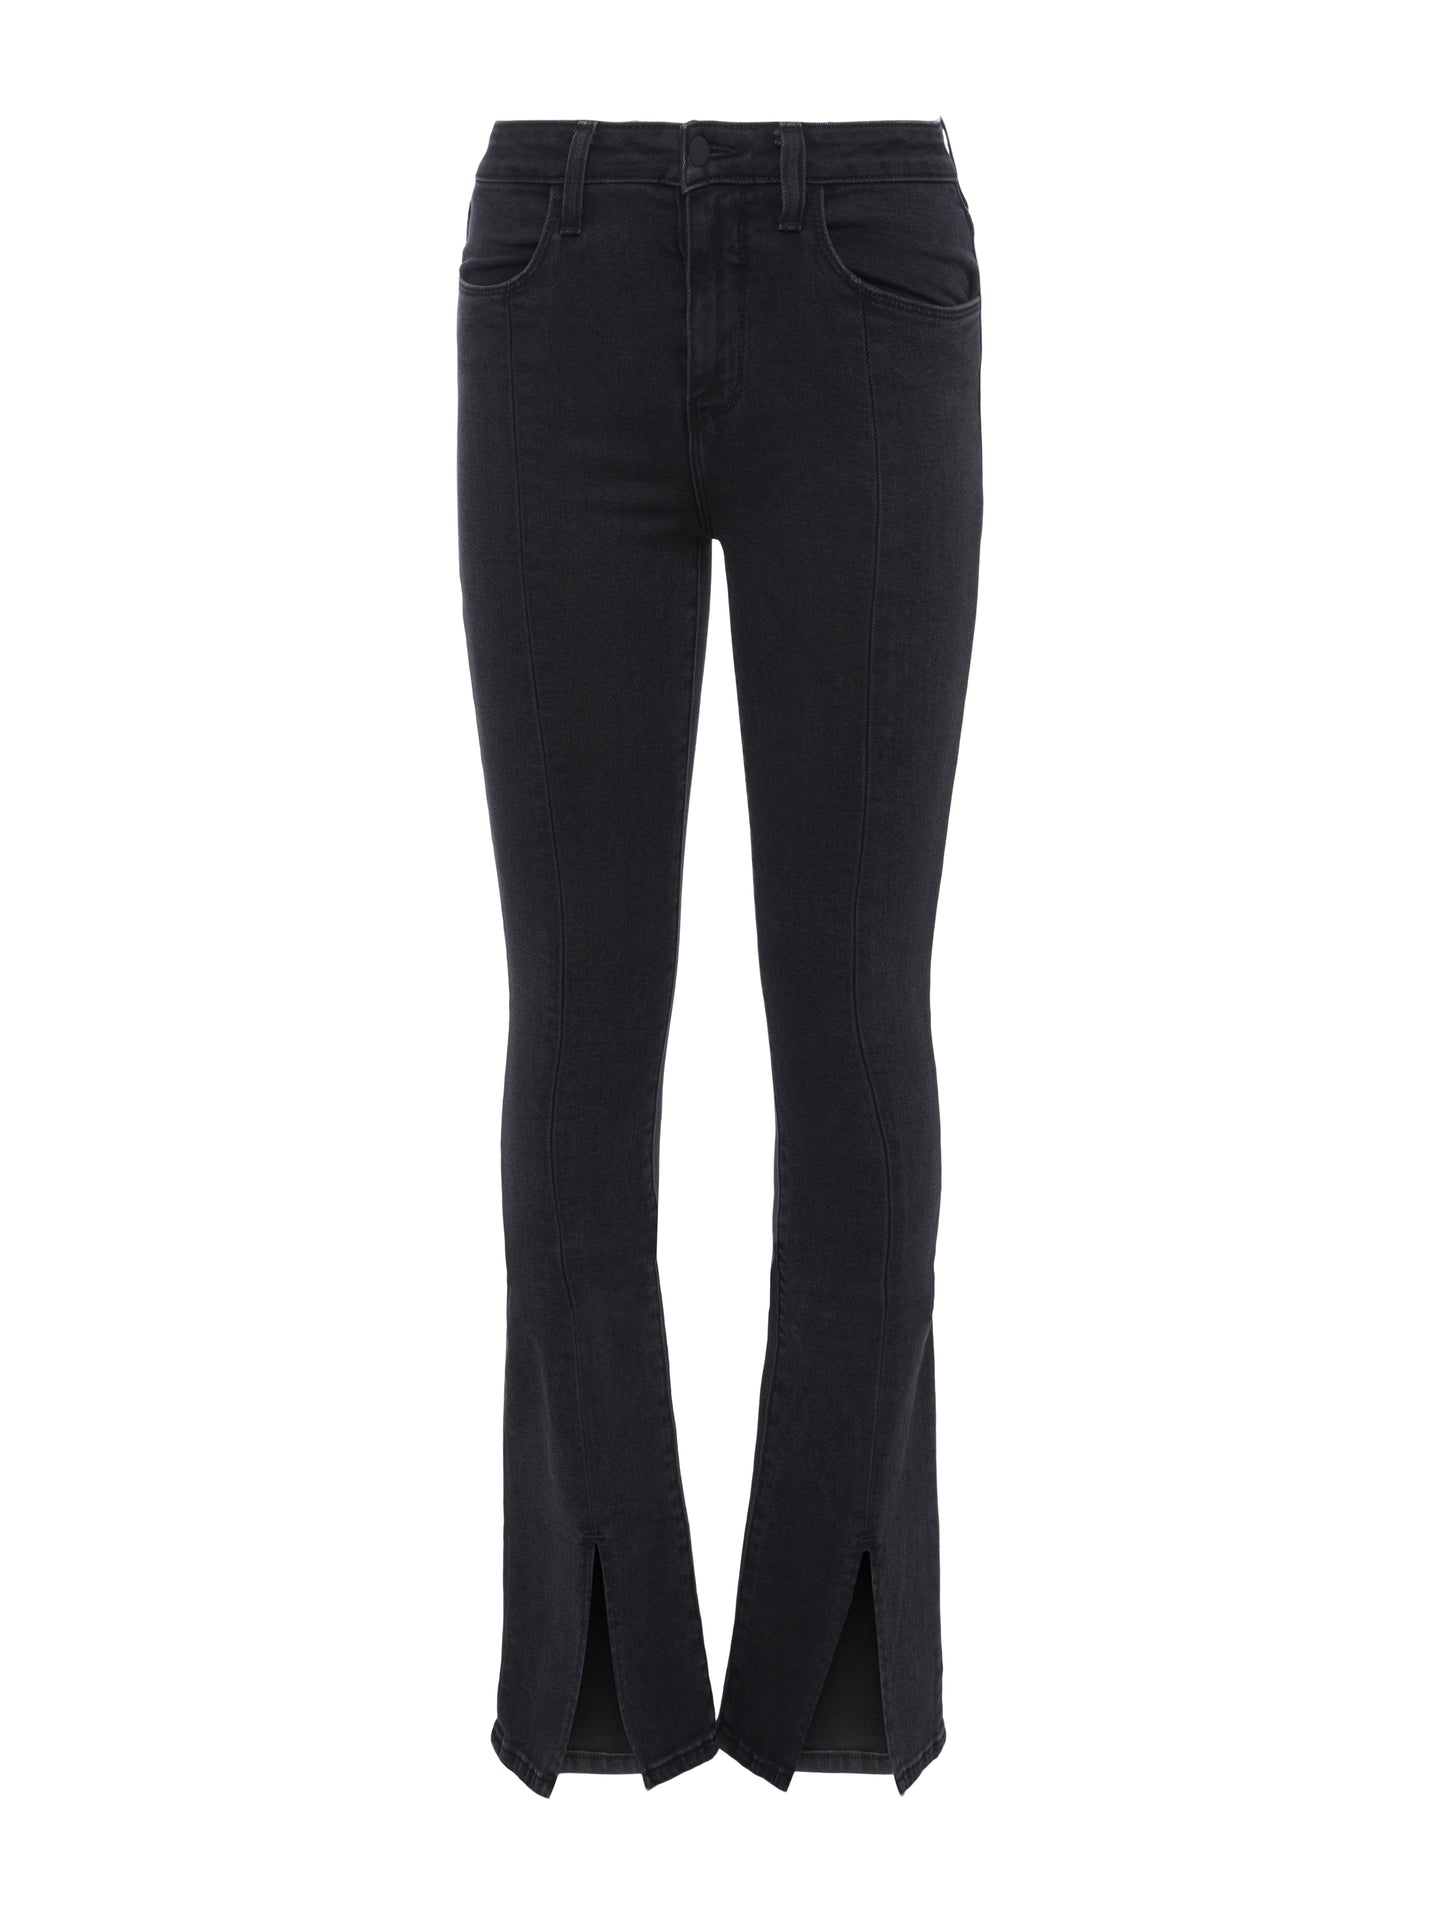 L'AGENCE - Women's Jeans & Denim Collection | Official Site